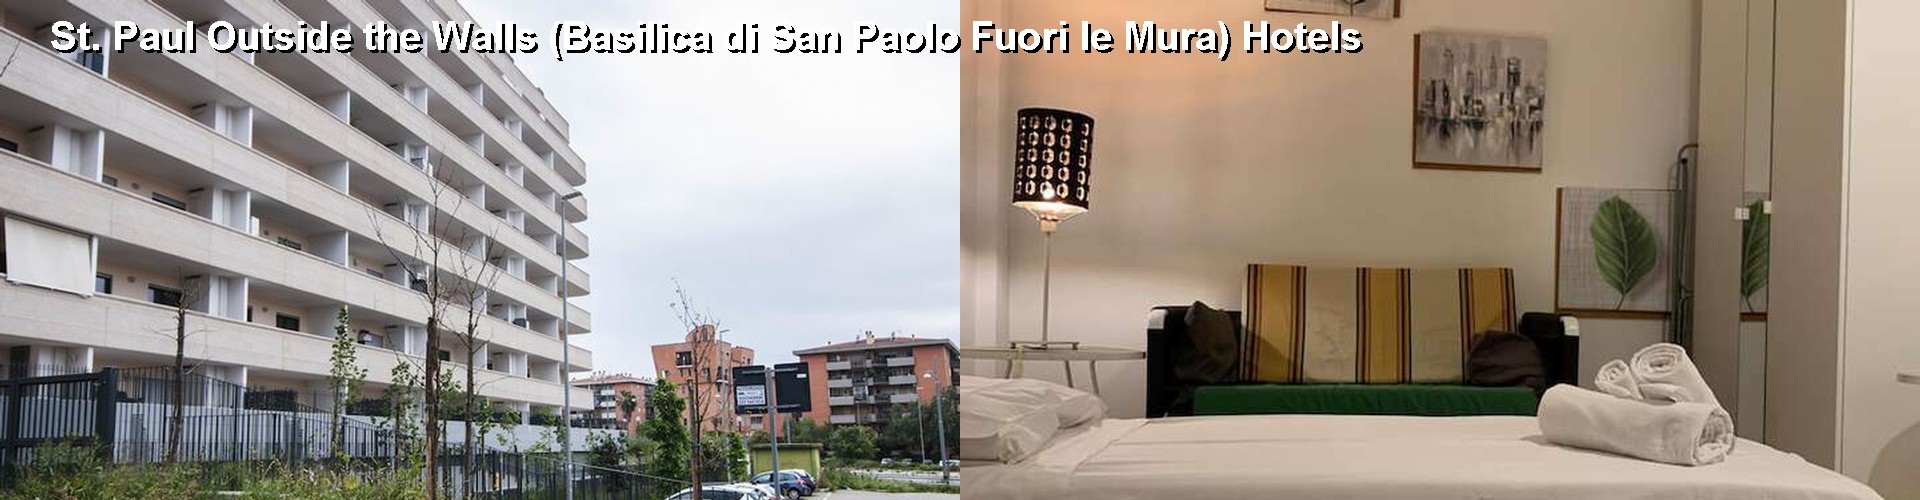 5 Best Hotels near St. Paul Outside the Walls (Basilica di San Paolo Fuori le Mura)